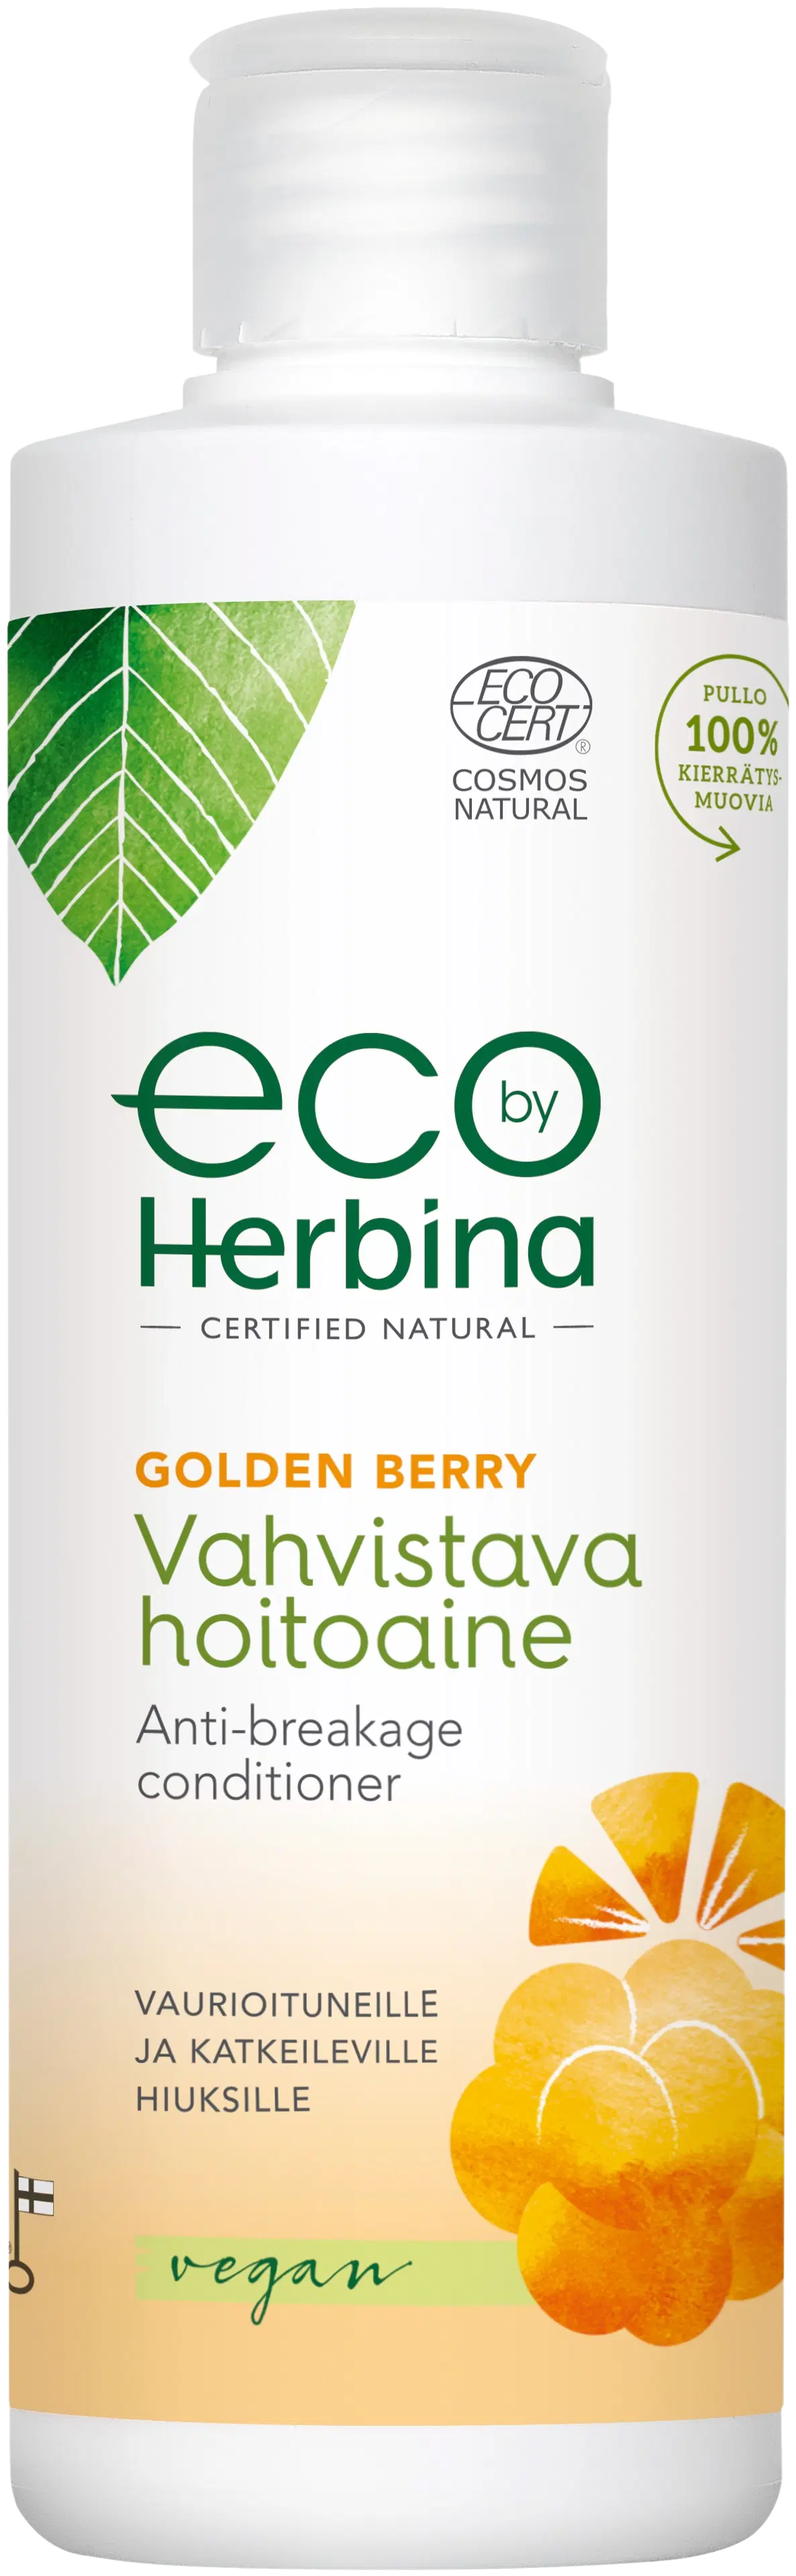 Eco by Herbina 250ml Golden Berry Anti-breakage hoitoaine